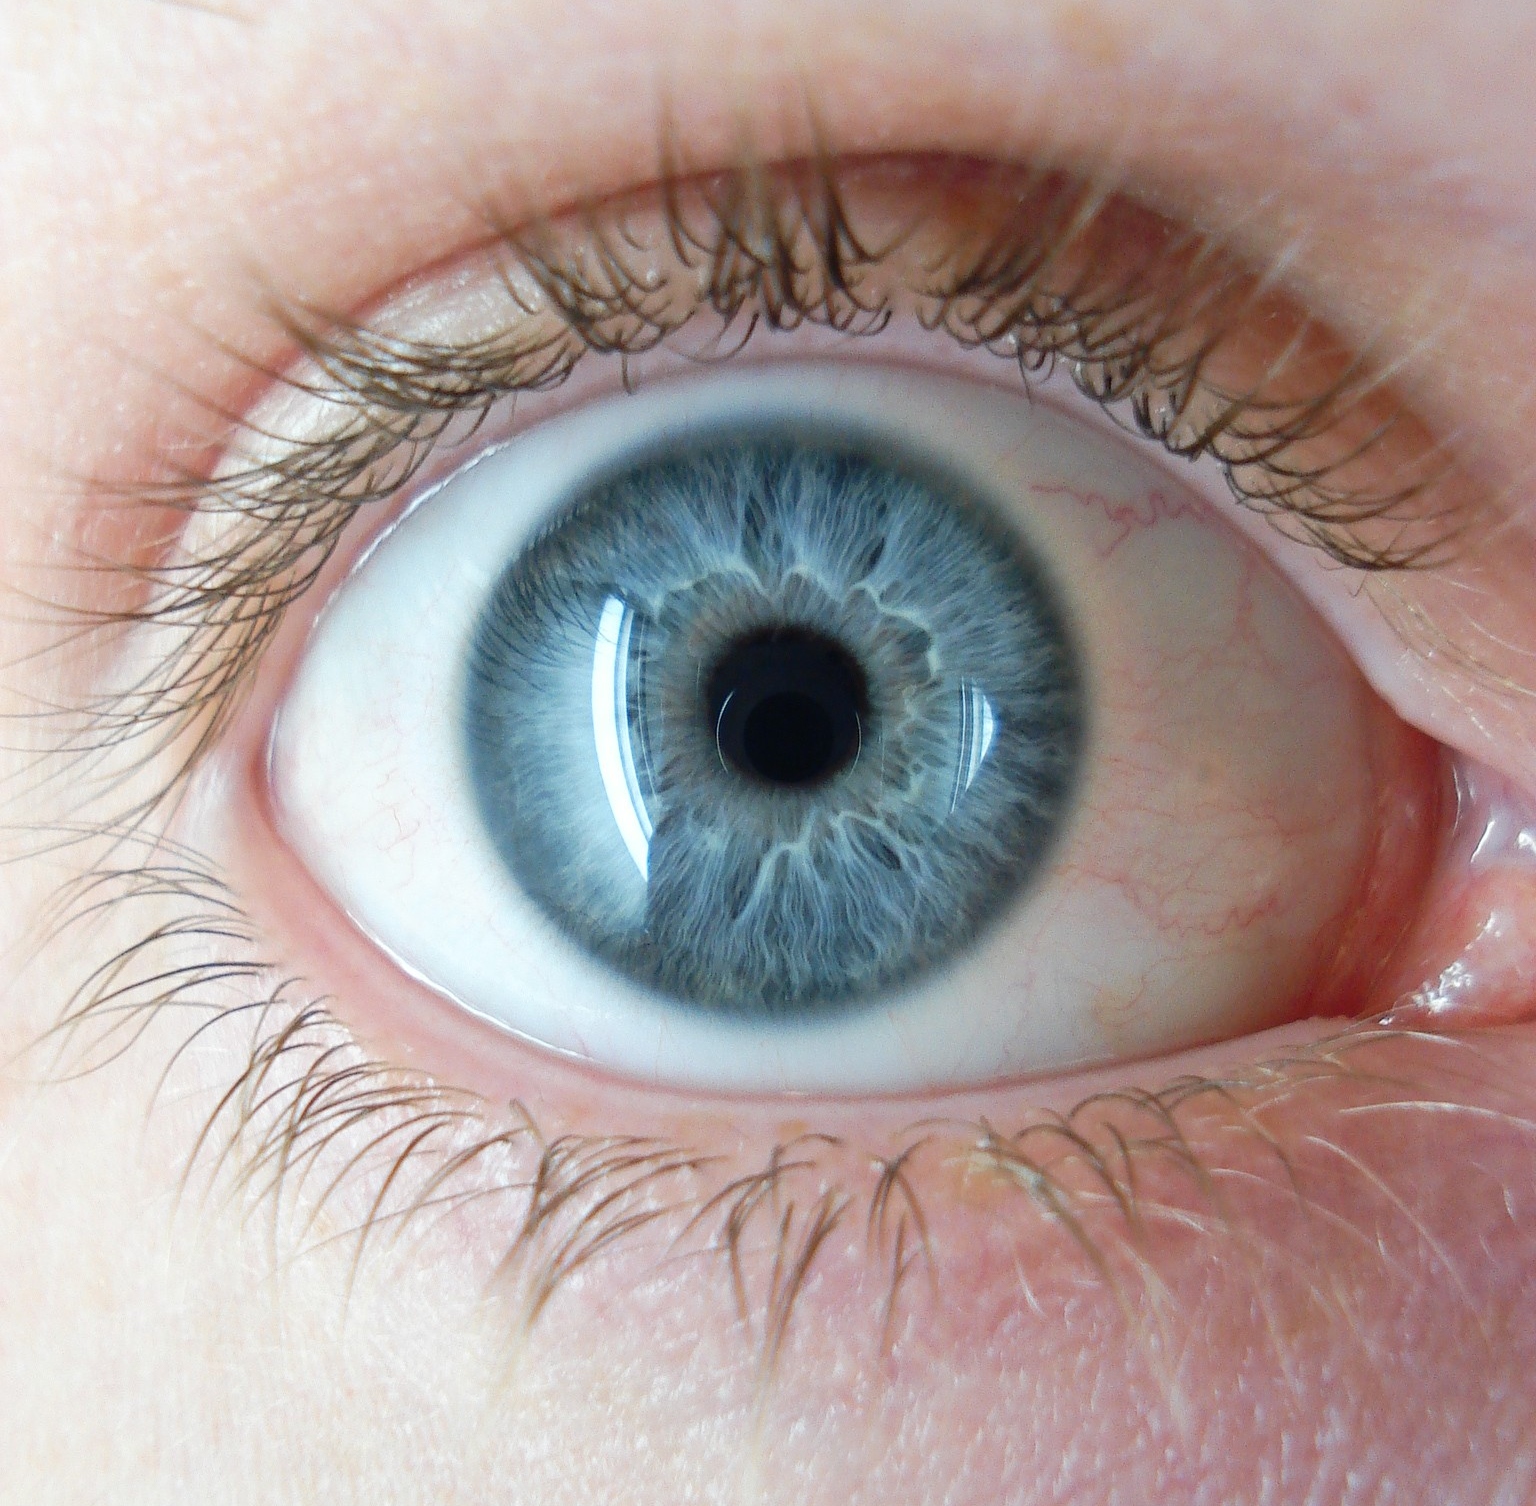 File:A blue eye.jpg - Wikimedia Commons